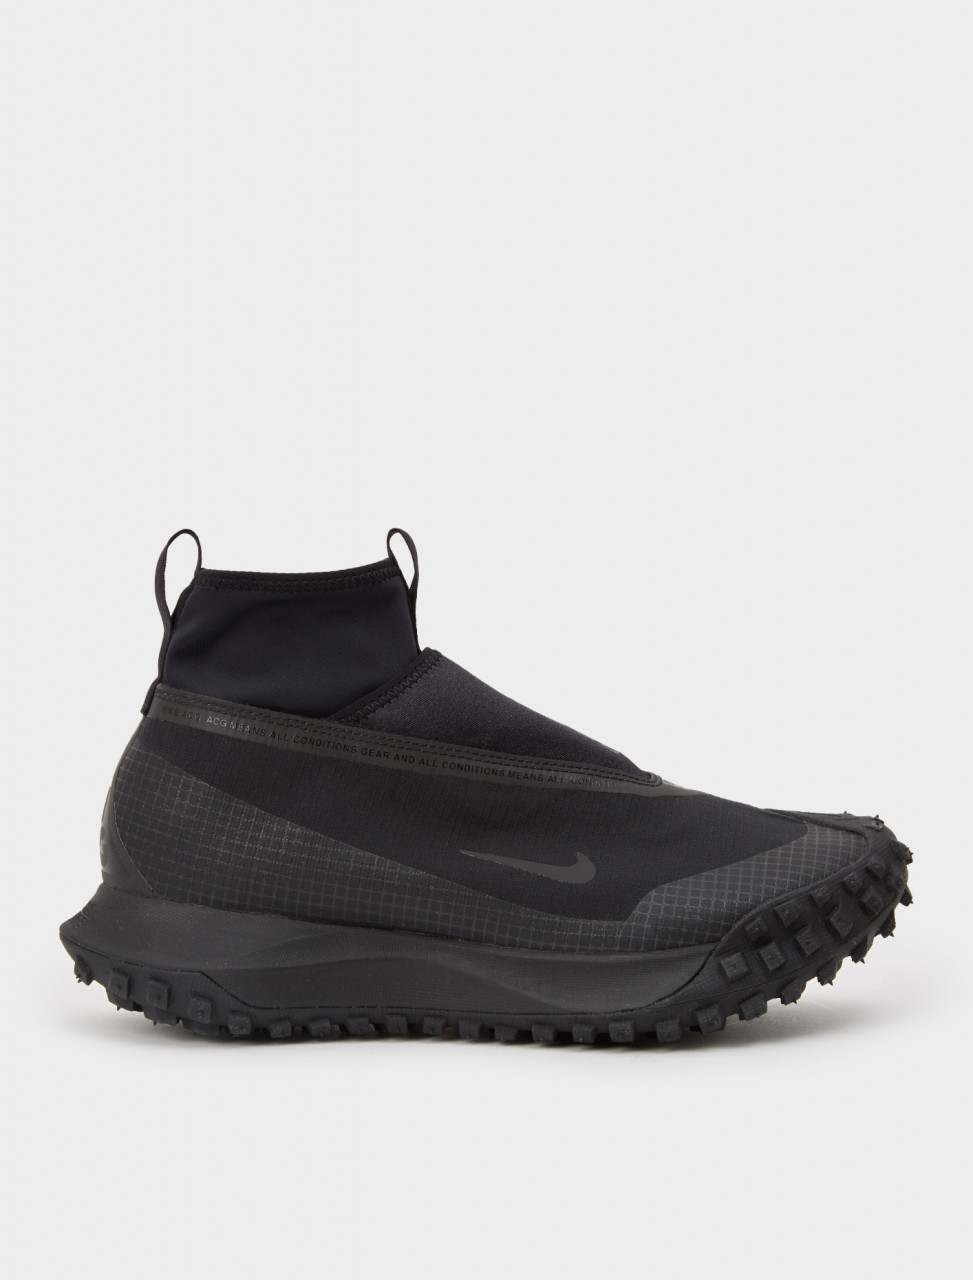 Nike ACG GORE-TEX "Mountain Fly" Sneaker in Black & Dark Grey | Voo